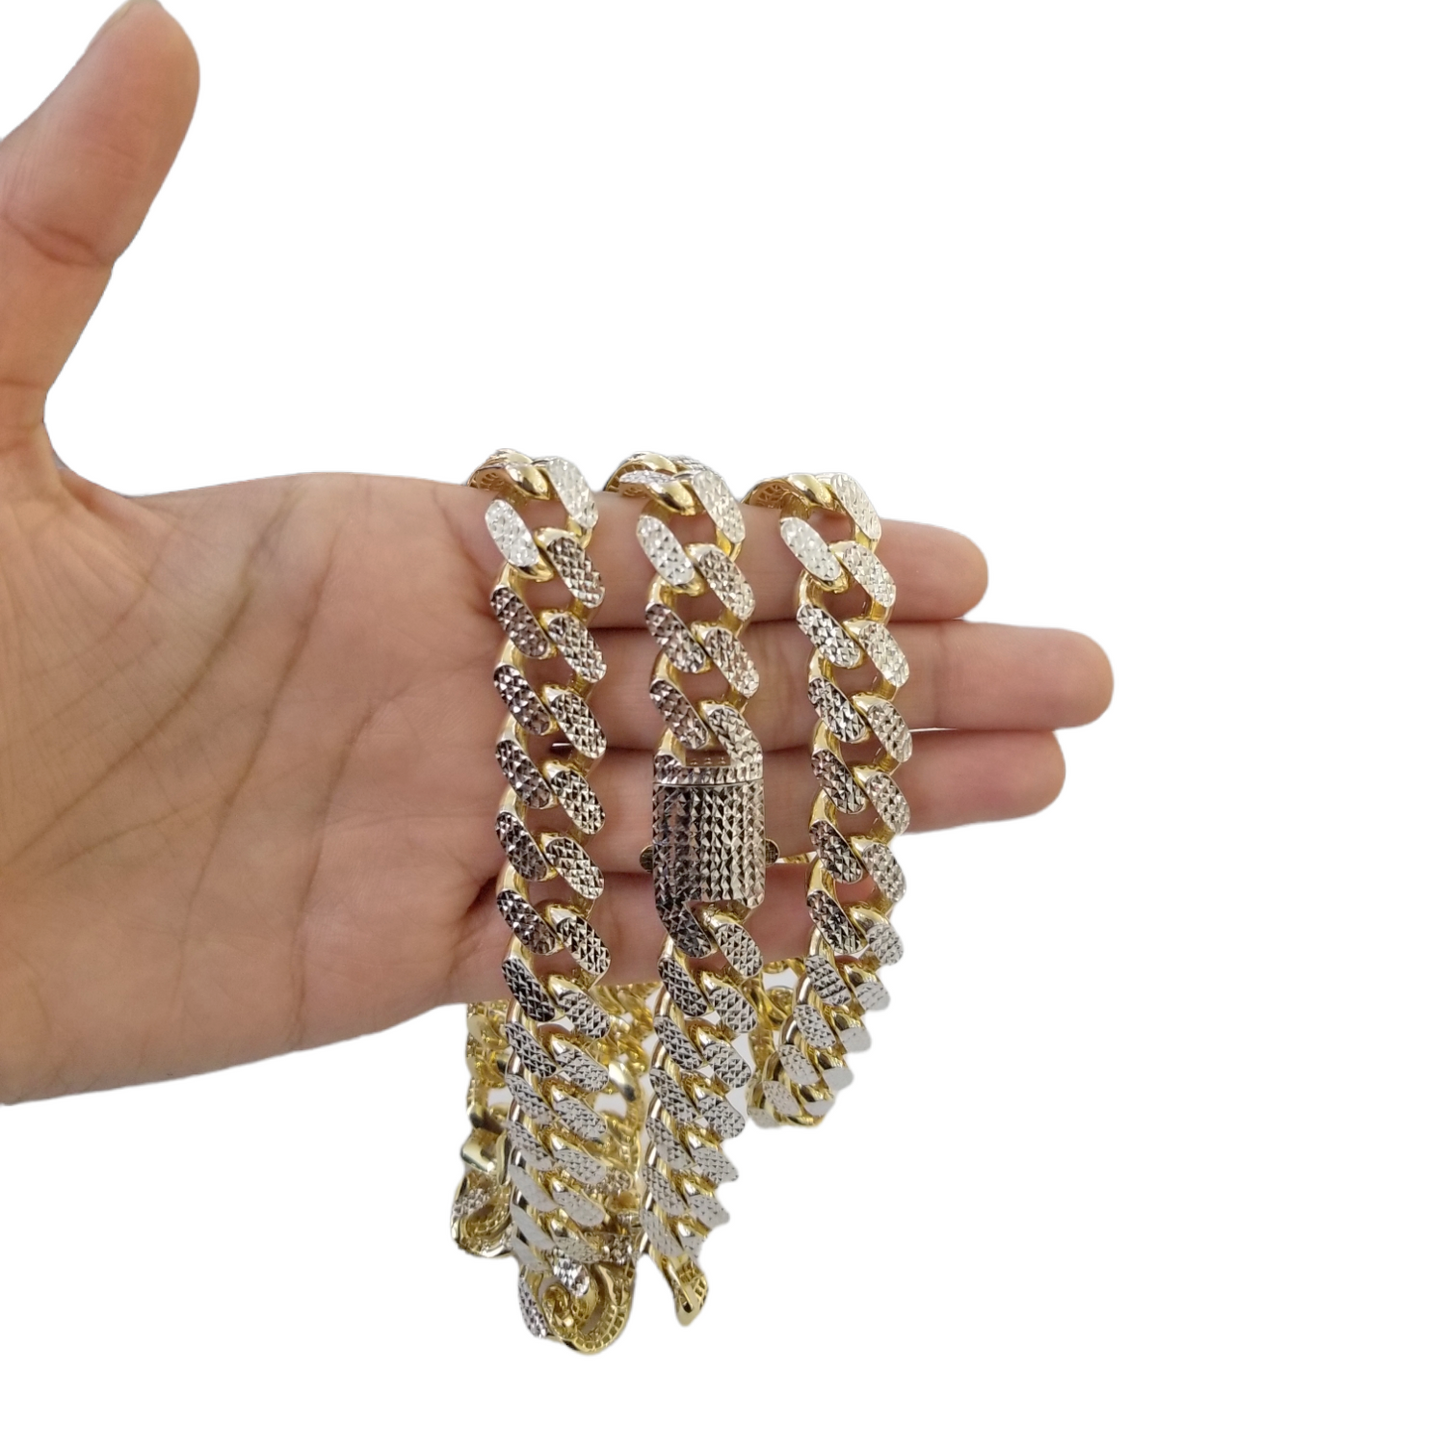 Real 10k Gold 12mm Royal Monaco Chain 25 Inch 9Inch Bracelet Set Diamond Cut